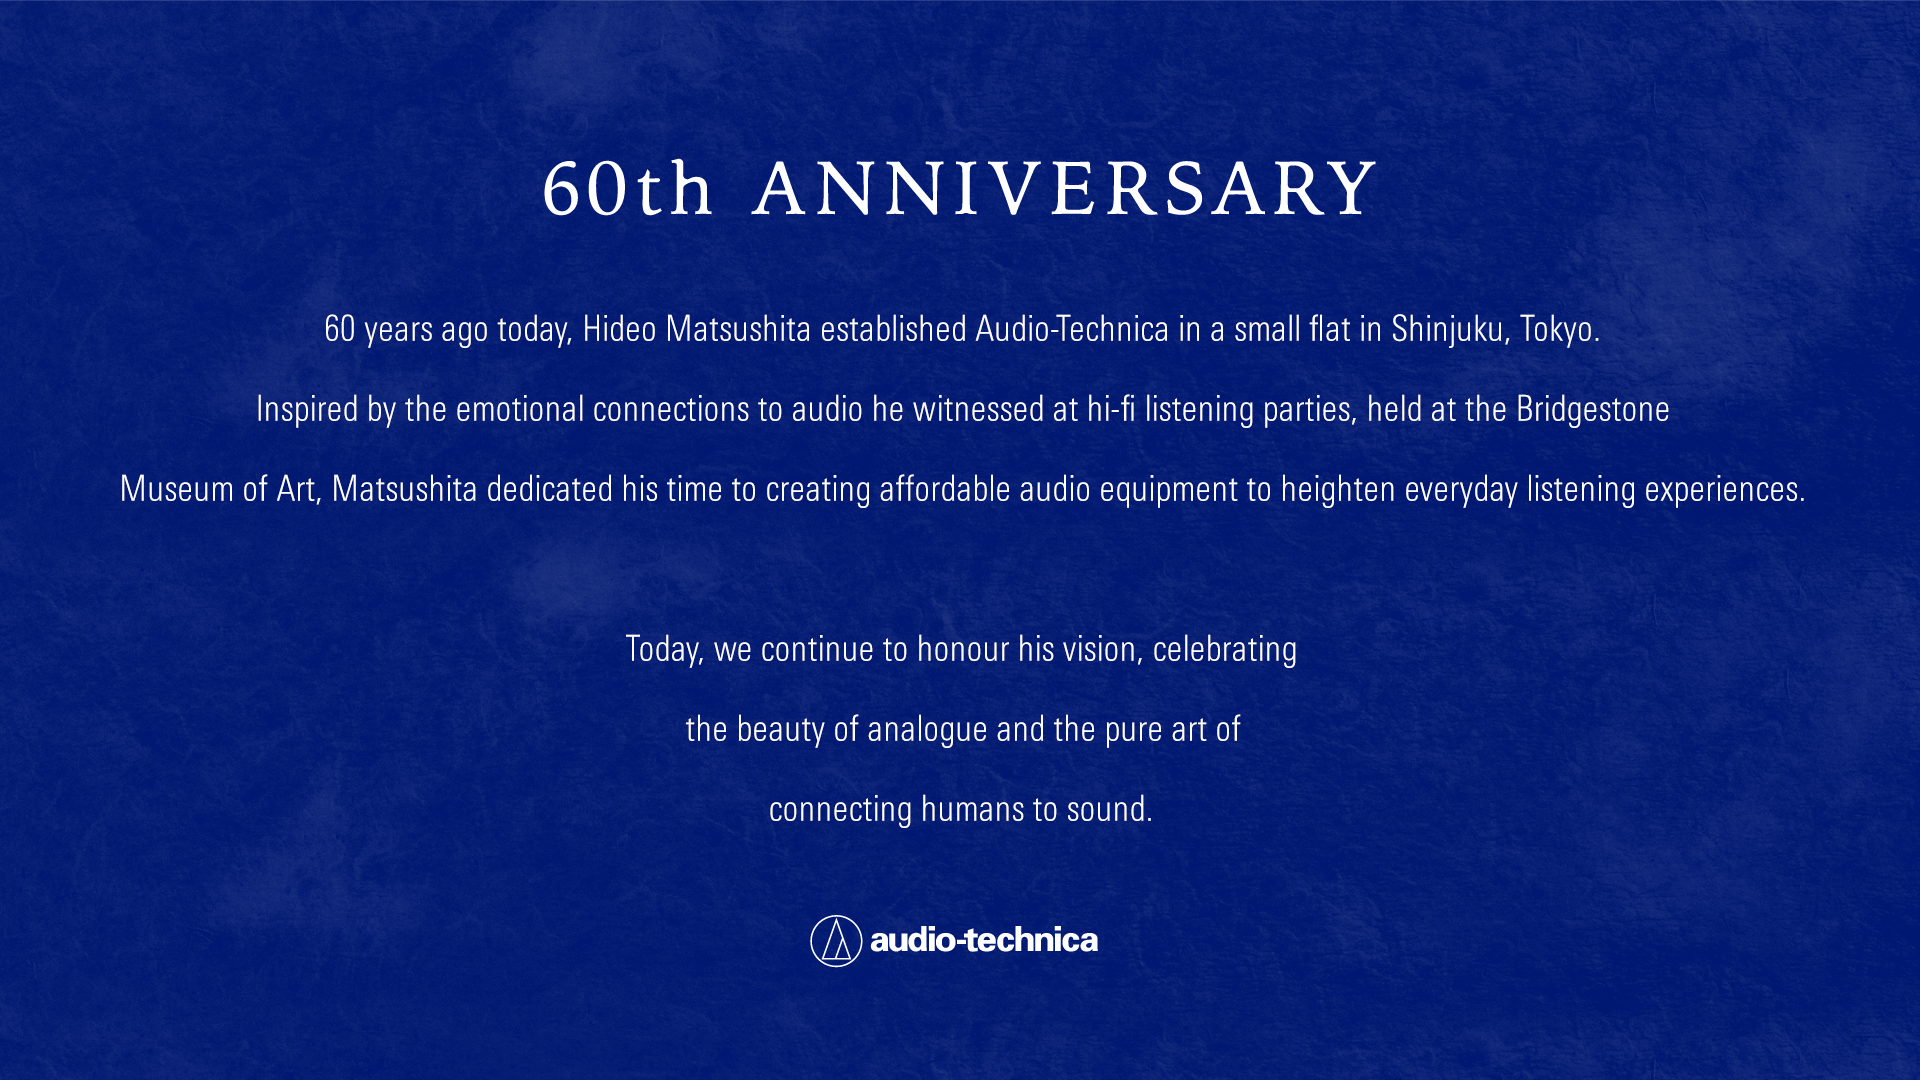 Audio-Technica Celebrates 60 Years of Analogue Audio